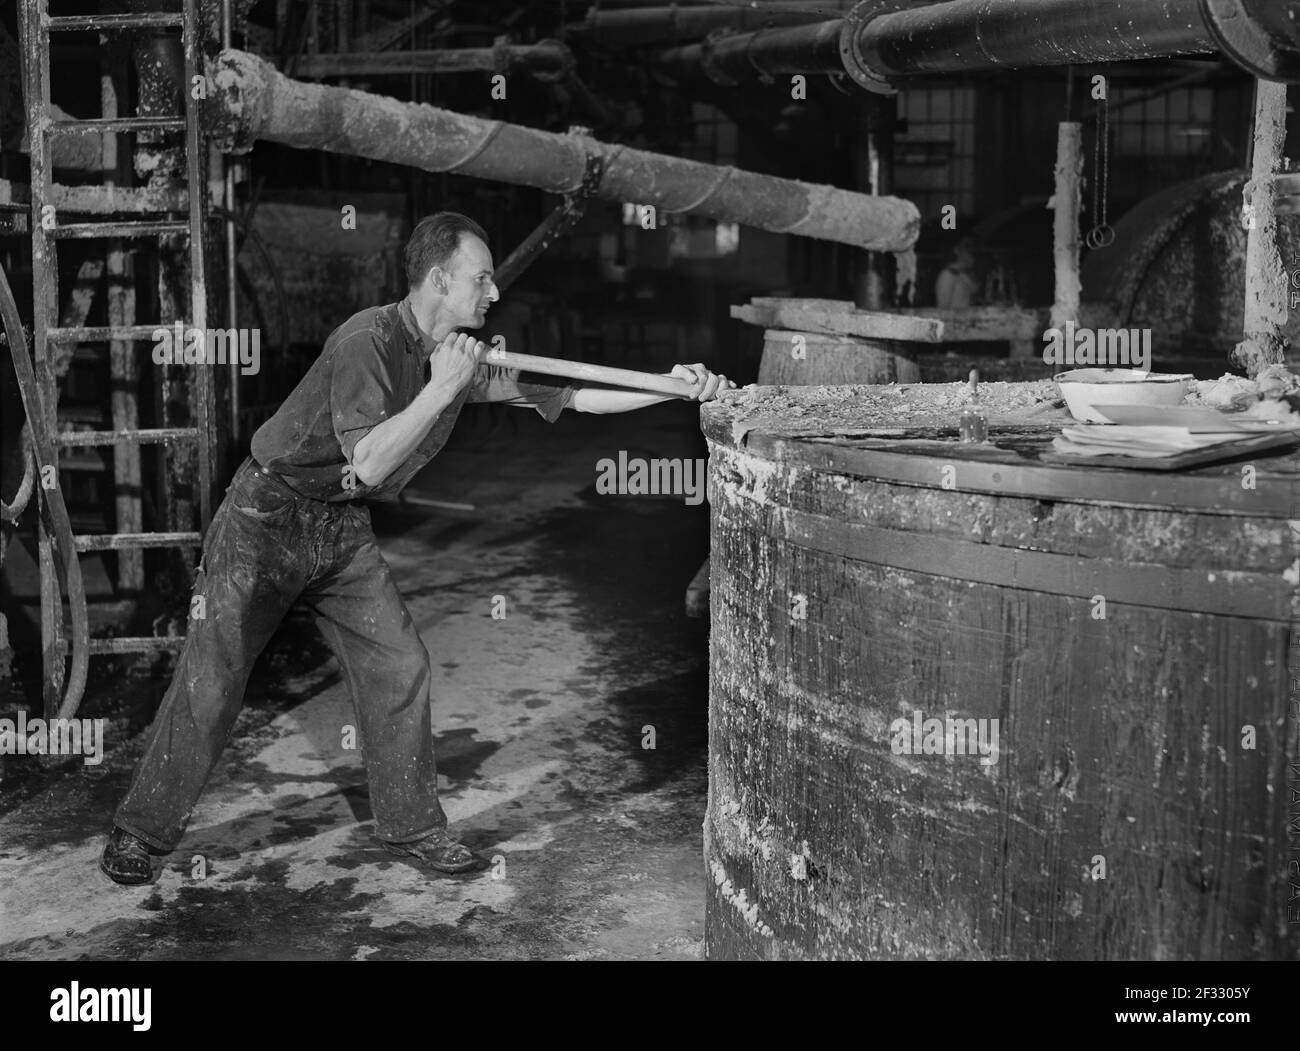 Worker stirring Paper Pulp in Large Vat, Mississquoi Corporation Paper Mill, Sheldon Springs, Vermont, USA, Jack Delano, U.S. Office of War Information, September 1941 Stock Photo